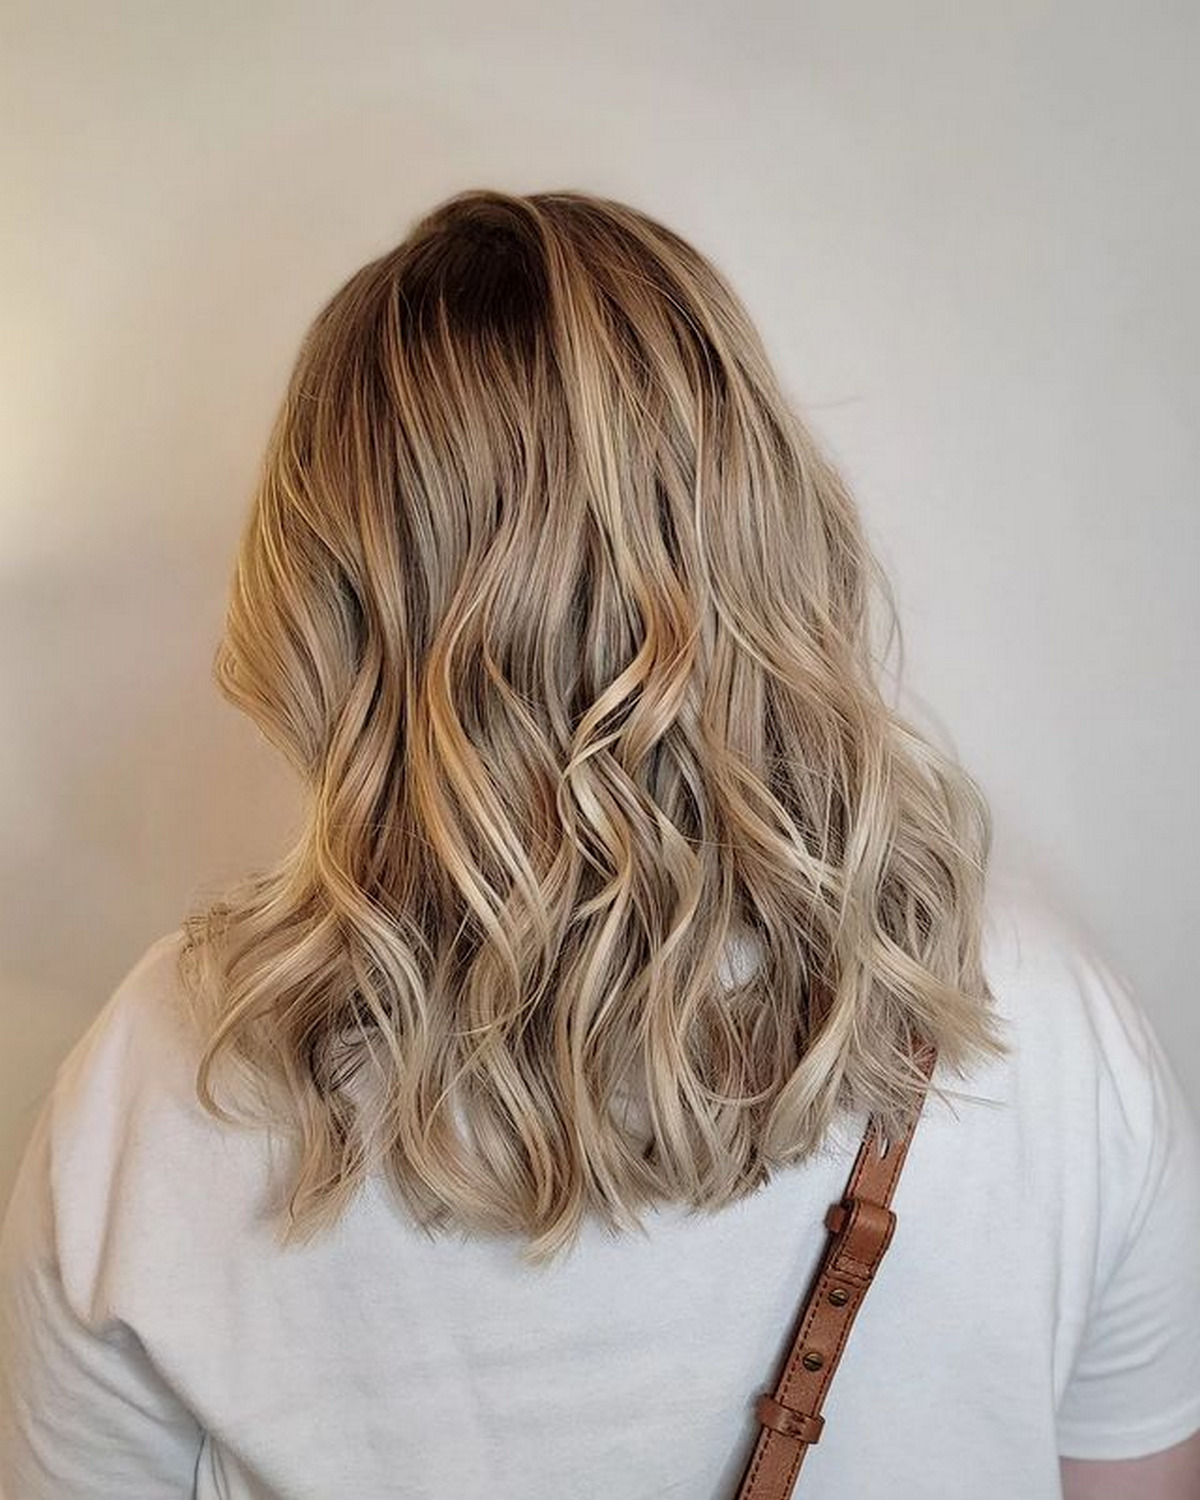 Medium-Length Blonde Hair With Beach Waves